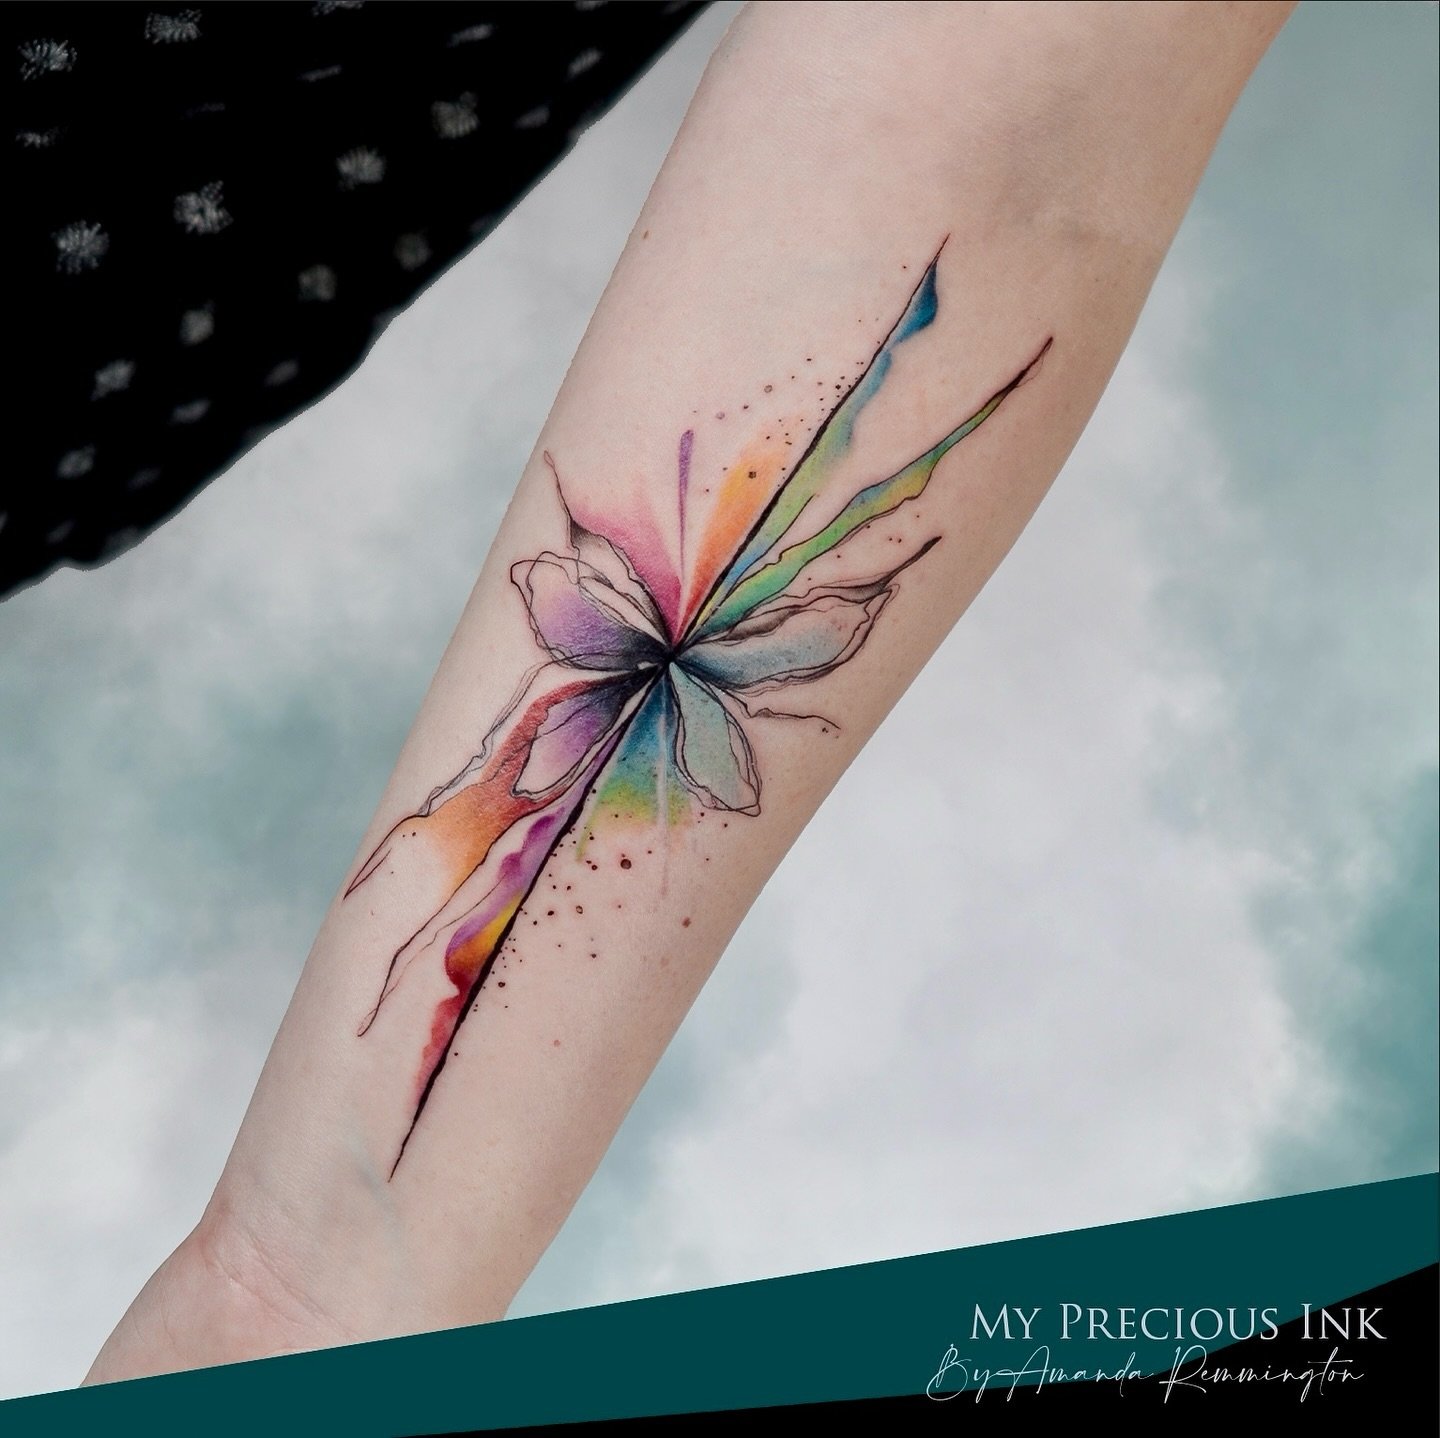 Freehand abstract butterfly watercolor tattoo 🤩

///&mdash;&mdash;&gt; www.mypreciousink.nl &lt;&mdash;&mdash;\\\

Optie 1 : 

#Tattoo #watercolortattoo #watercolourtattoo #watercolor #thebesttattooartists #tattoodo 
  #tattooart #tattooflower #tatt